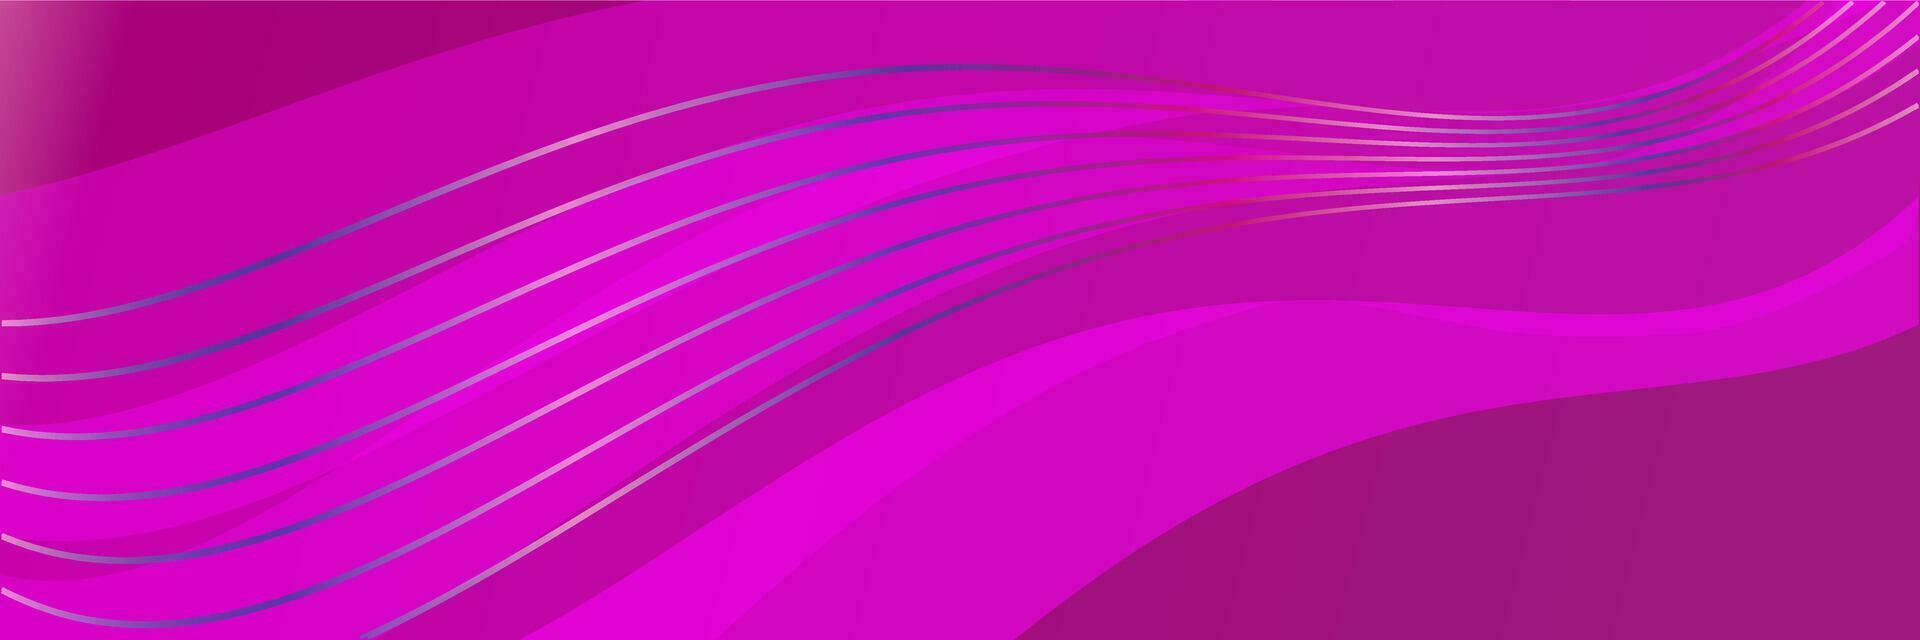 vector abstract gloeiend roze lila achtergrond. horizontaal banner.gloeiend geometrie lijnen. wazig helling sjabloon. eps10 vector